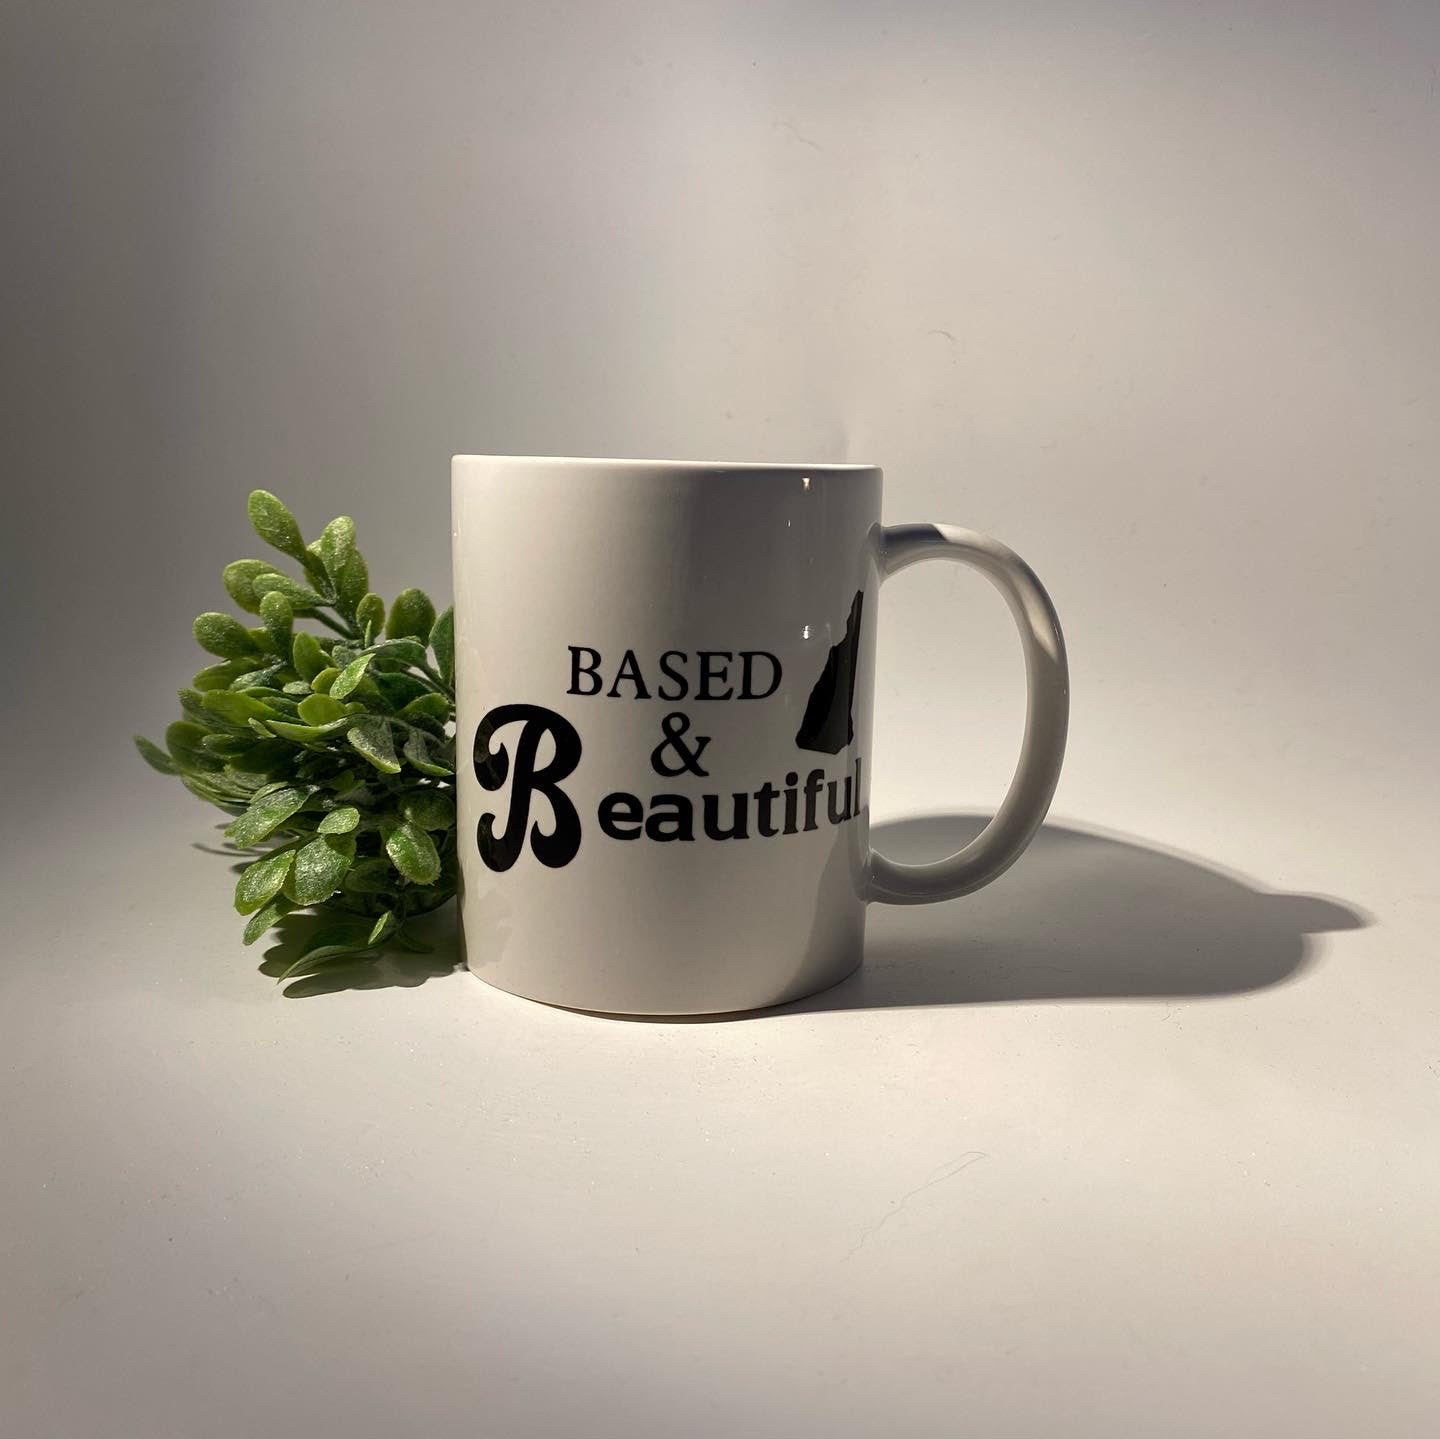 Based and Beautiful New Hampshire mug.